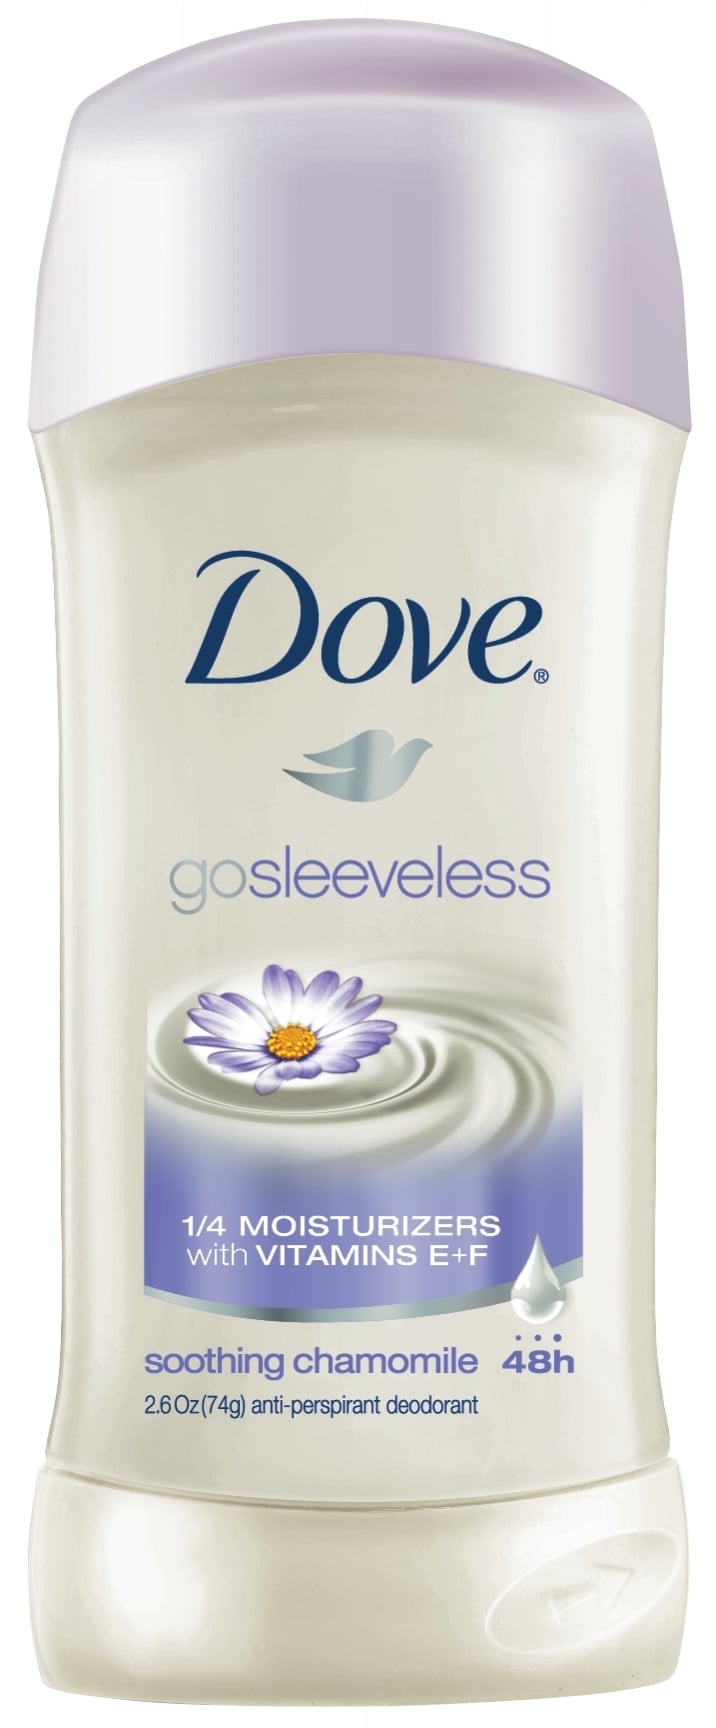 Dove GoSleeveless Deodorant in Soothing Chamomile